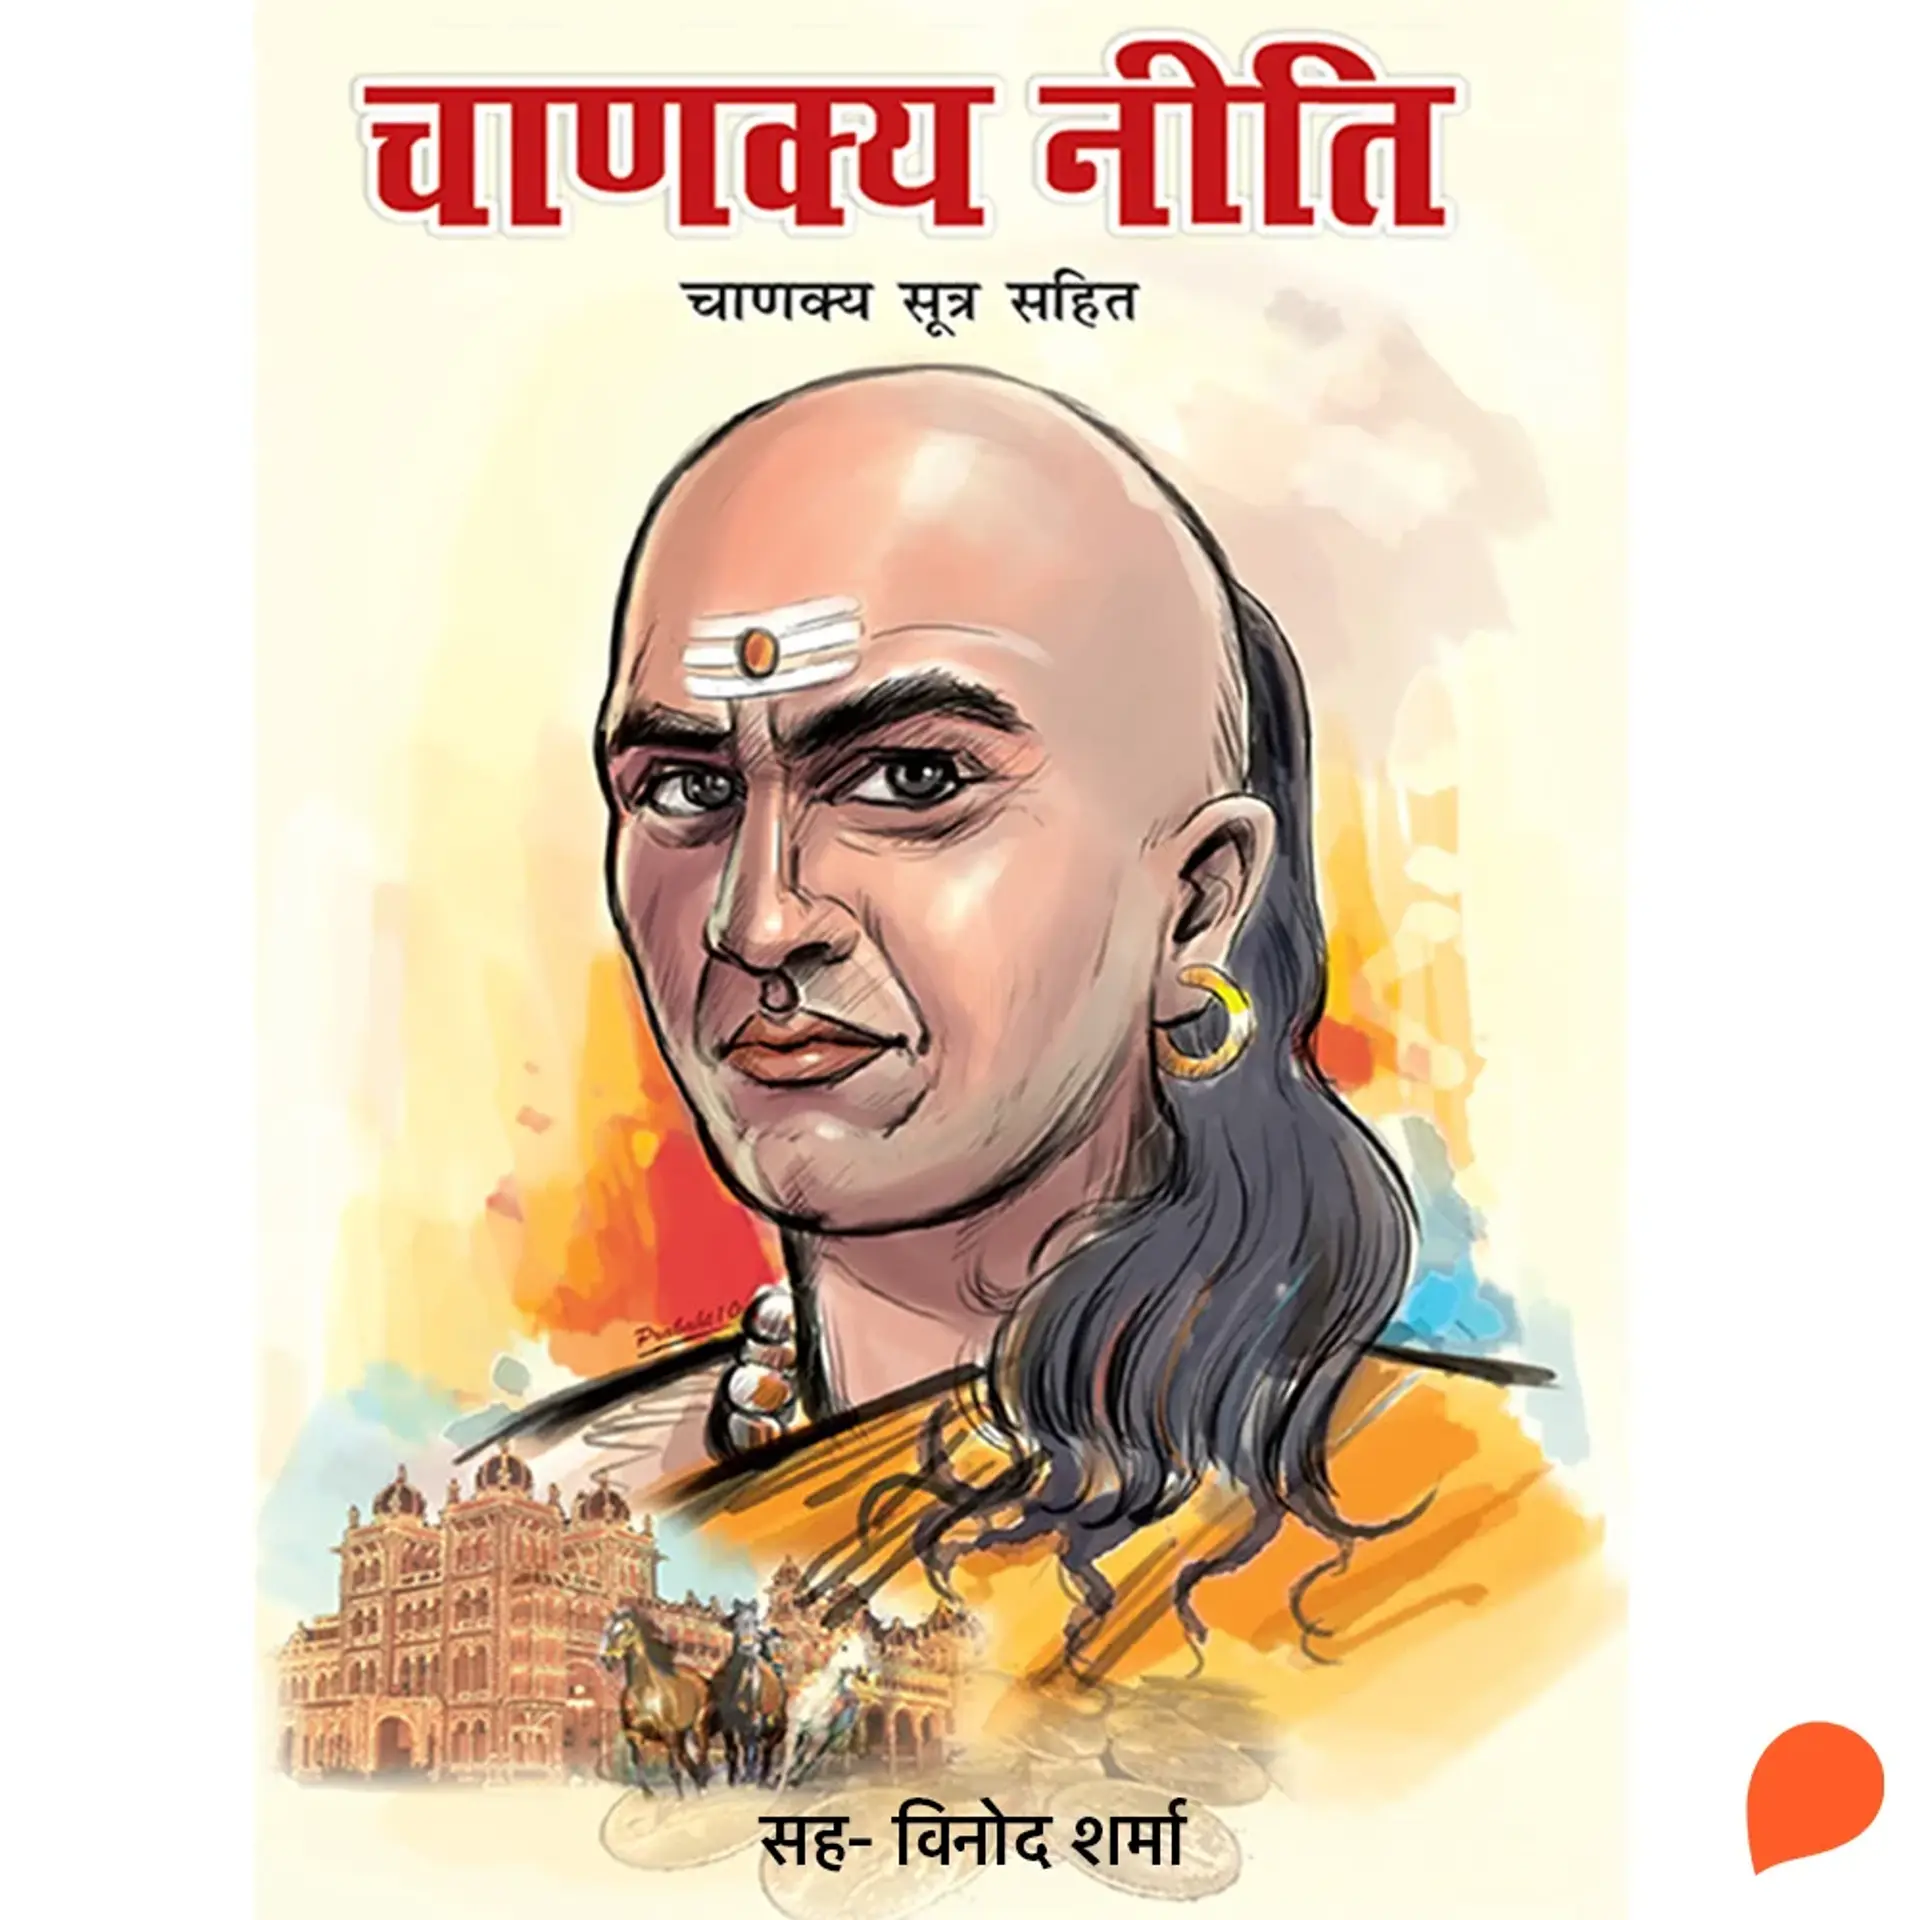 Chanakya Neeti | 